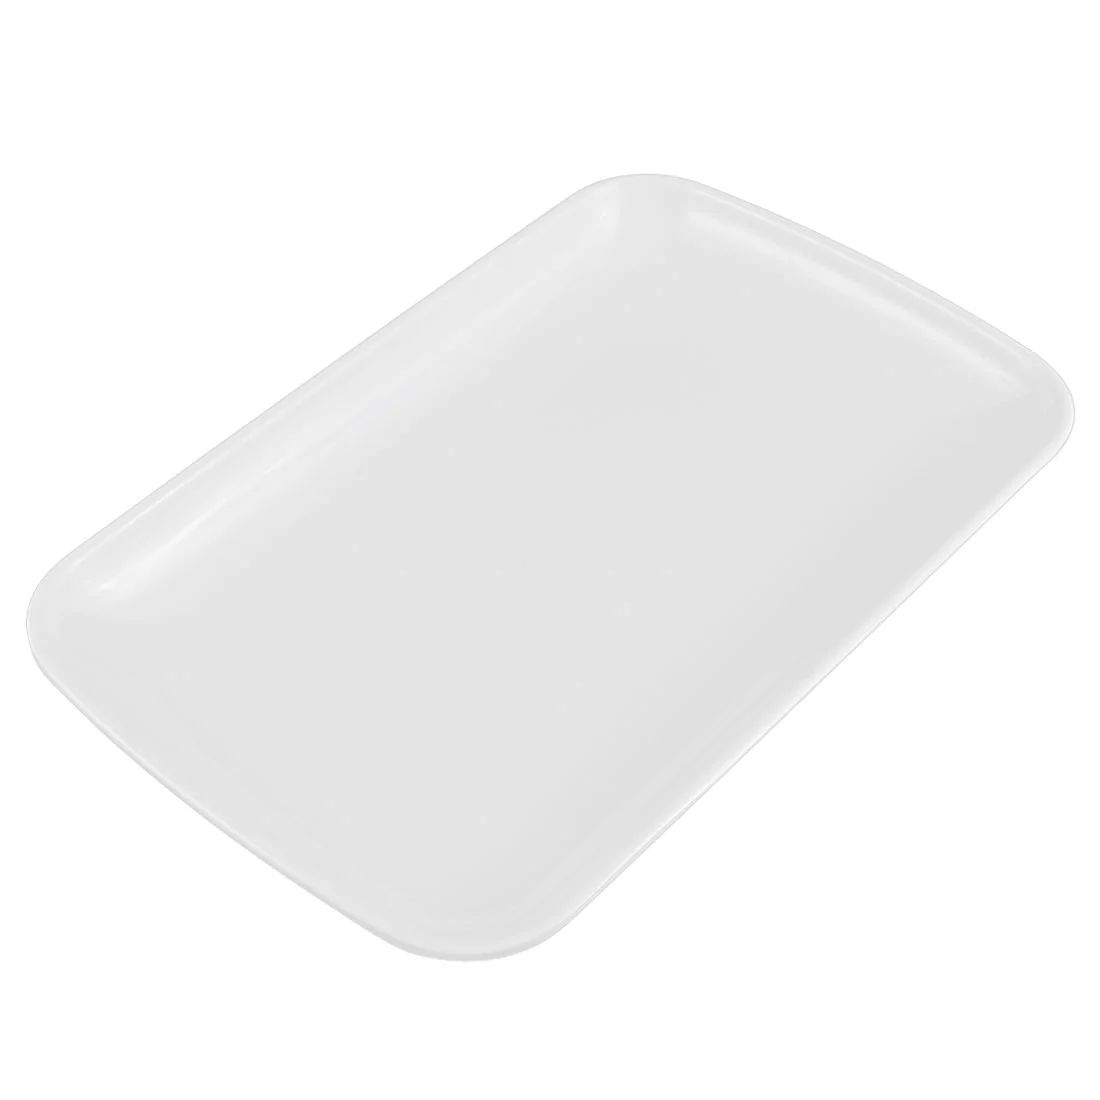 Unique Bargains Plastic Rectangle Shaped Dinner Dessert Vermicelli Snack Plate Dish White | Walmart (US)